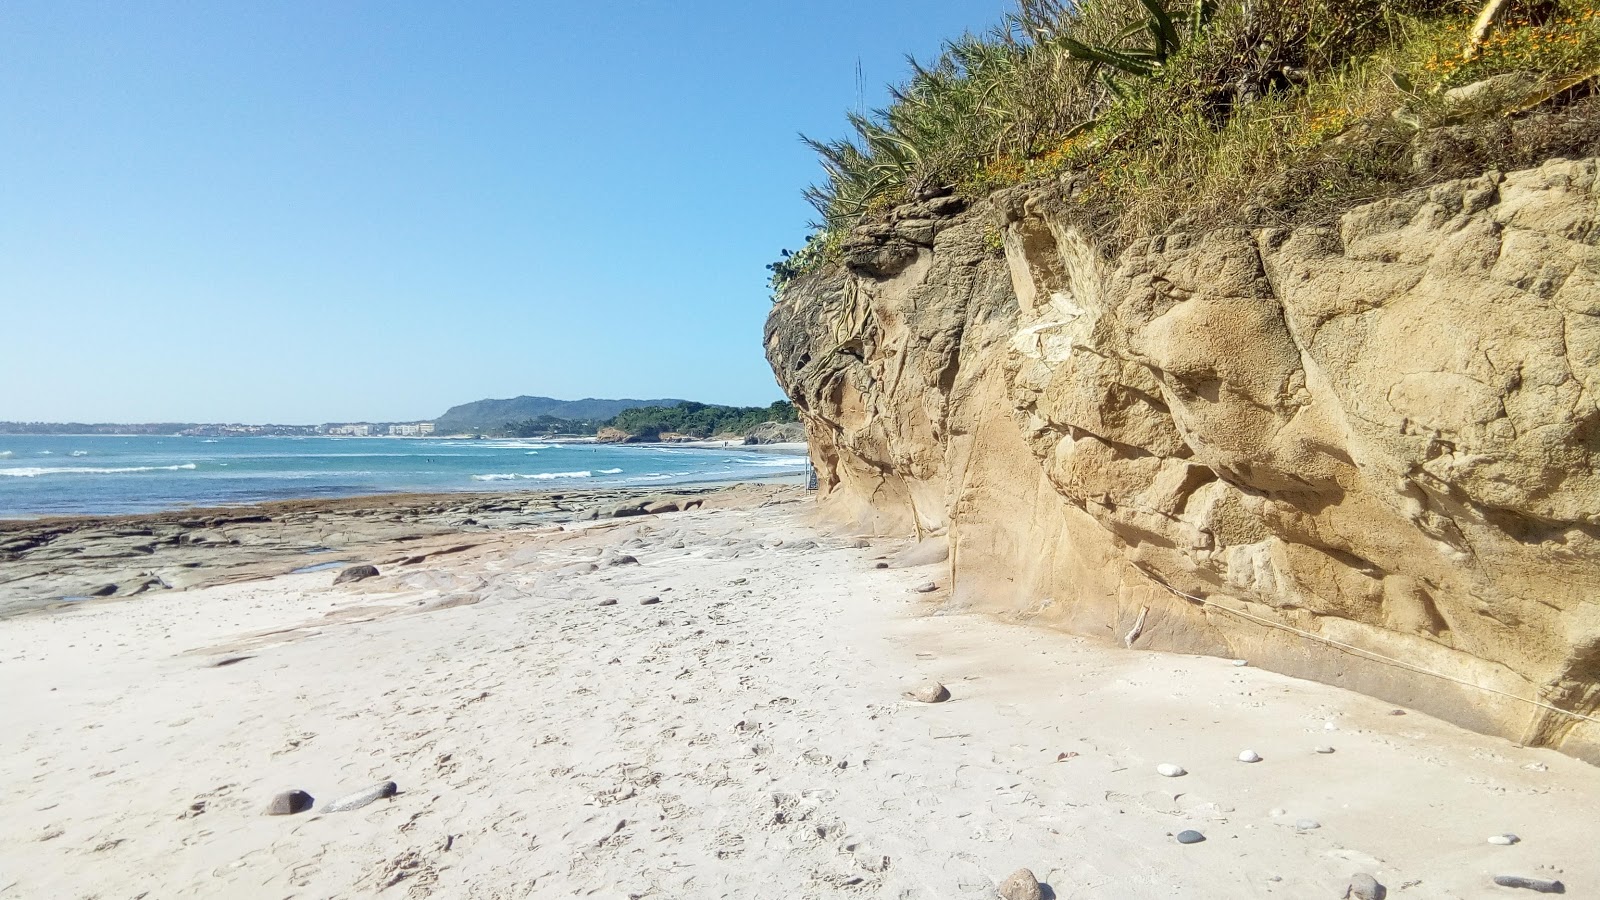 Foto di Lancha beach ubicato in zona naturale